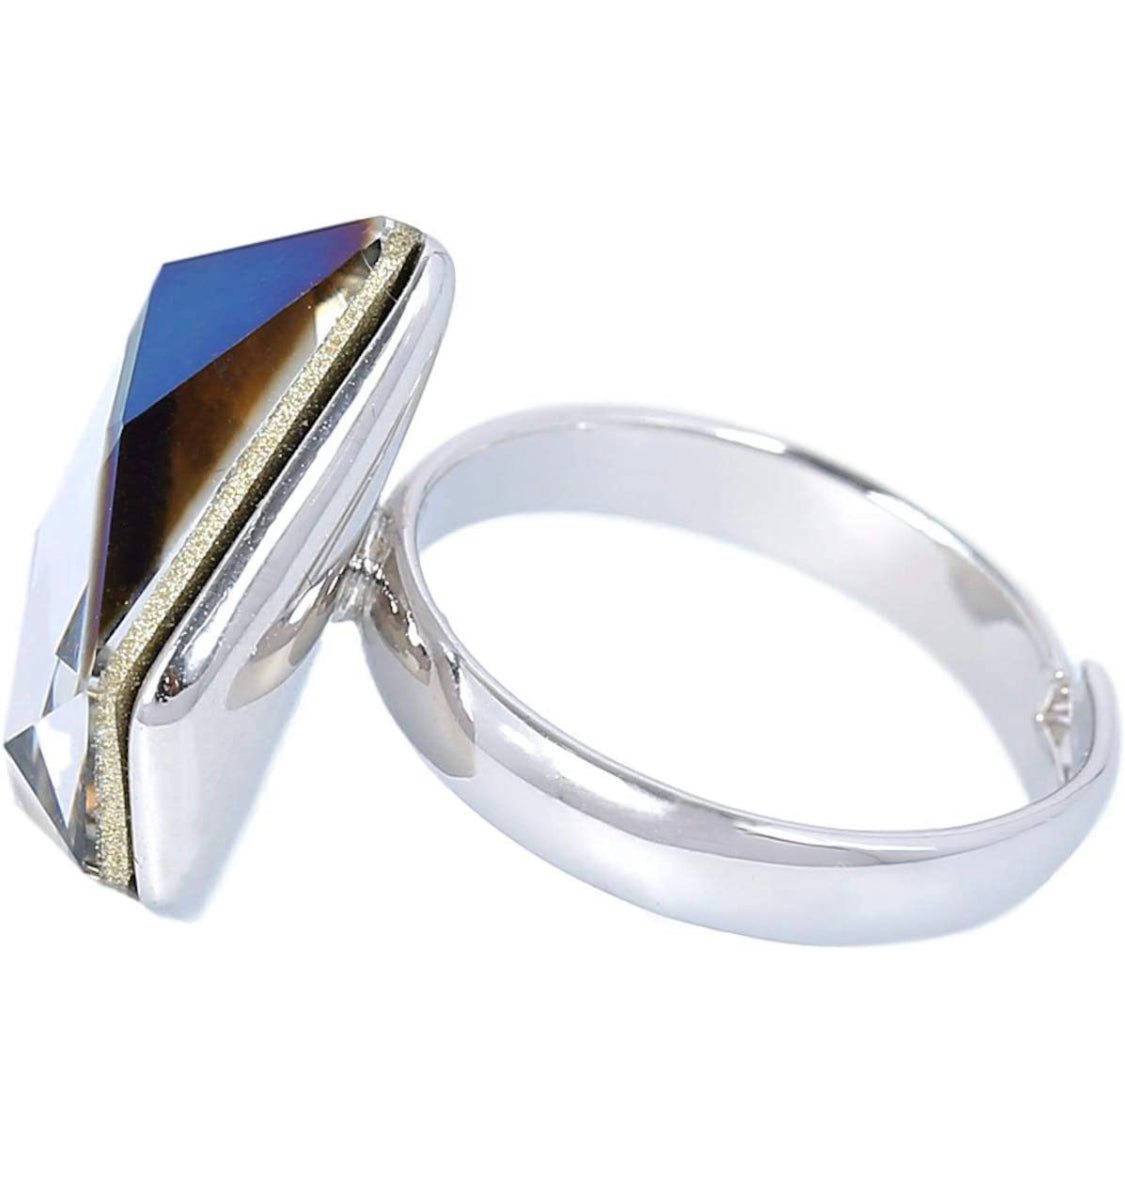 Free size Swarovski ring unique diamond shaped crystal